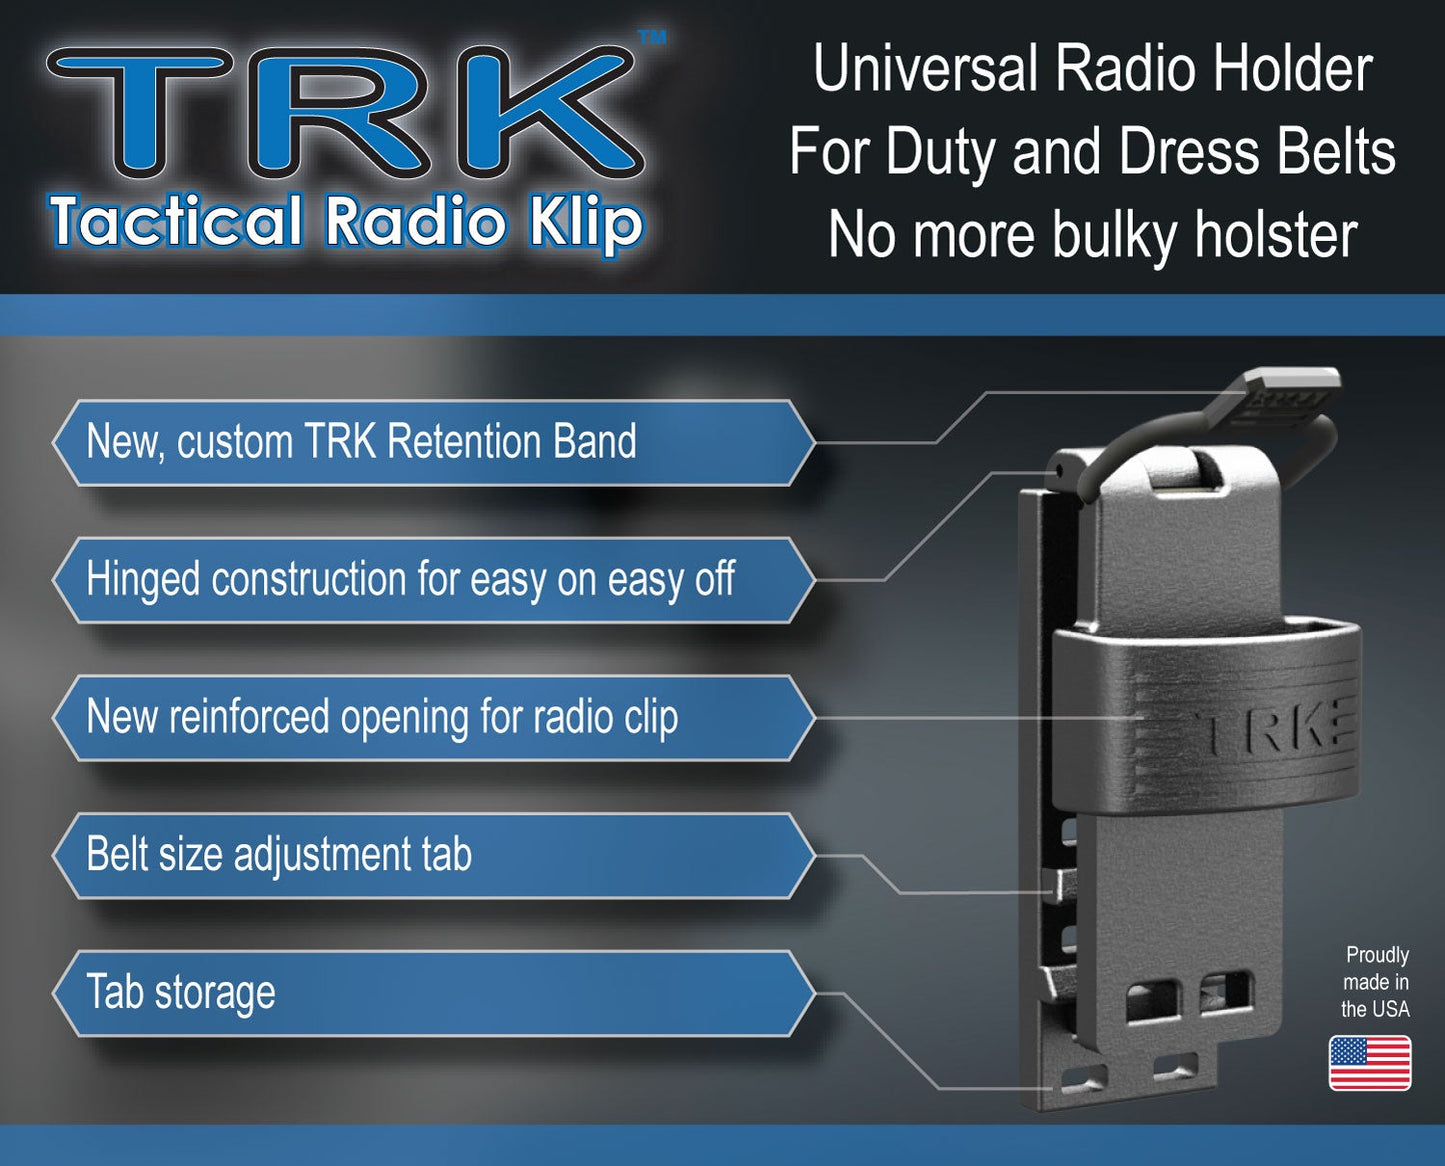 Tactical Radio Klip